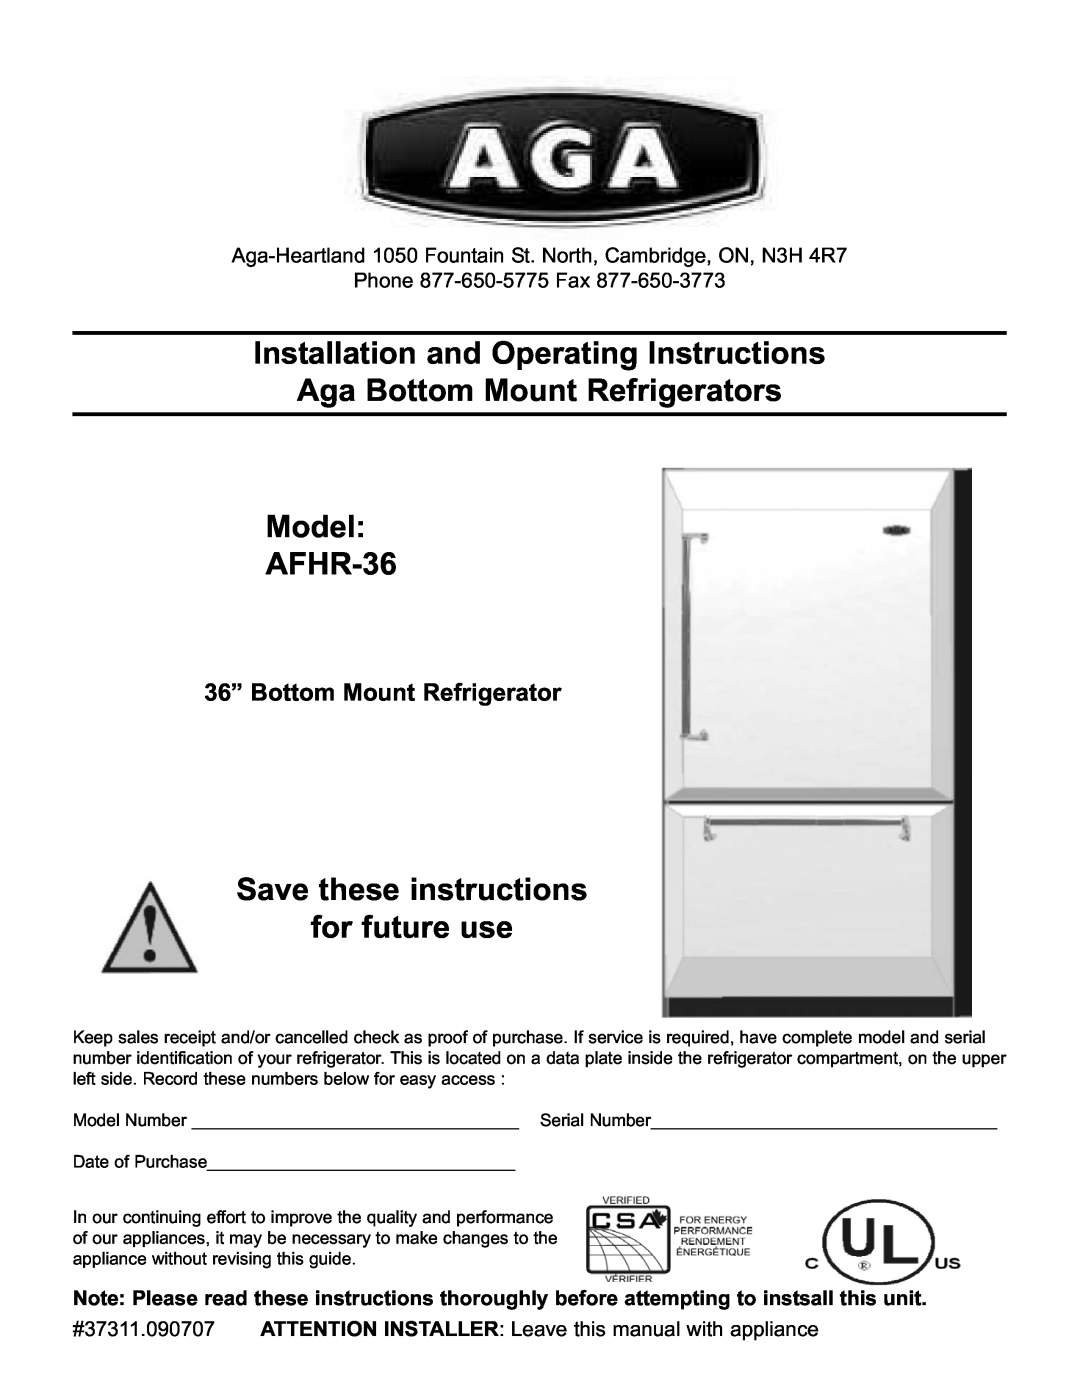 Aga Ranges manual Installation and Operating Instructions, Aga Bottom Mount Refrigerators Model AFHR-36 